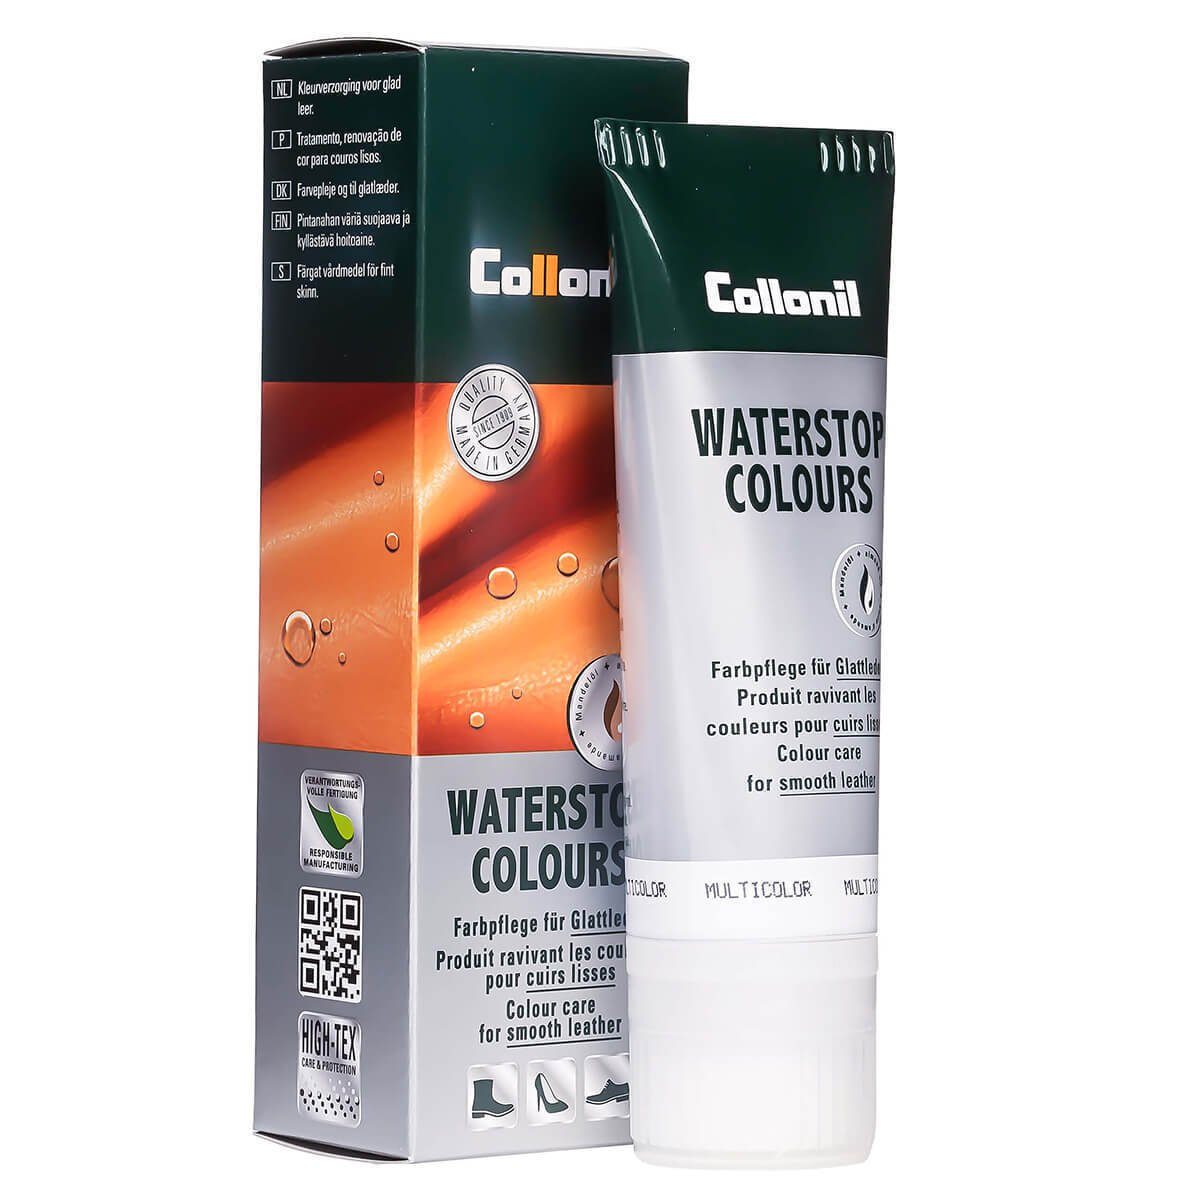 Collonil Waterstop Colours - Farbige Pflege- und Imprägniercreme für Glattleder Schuhcreme Multicolor